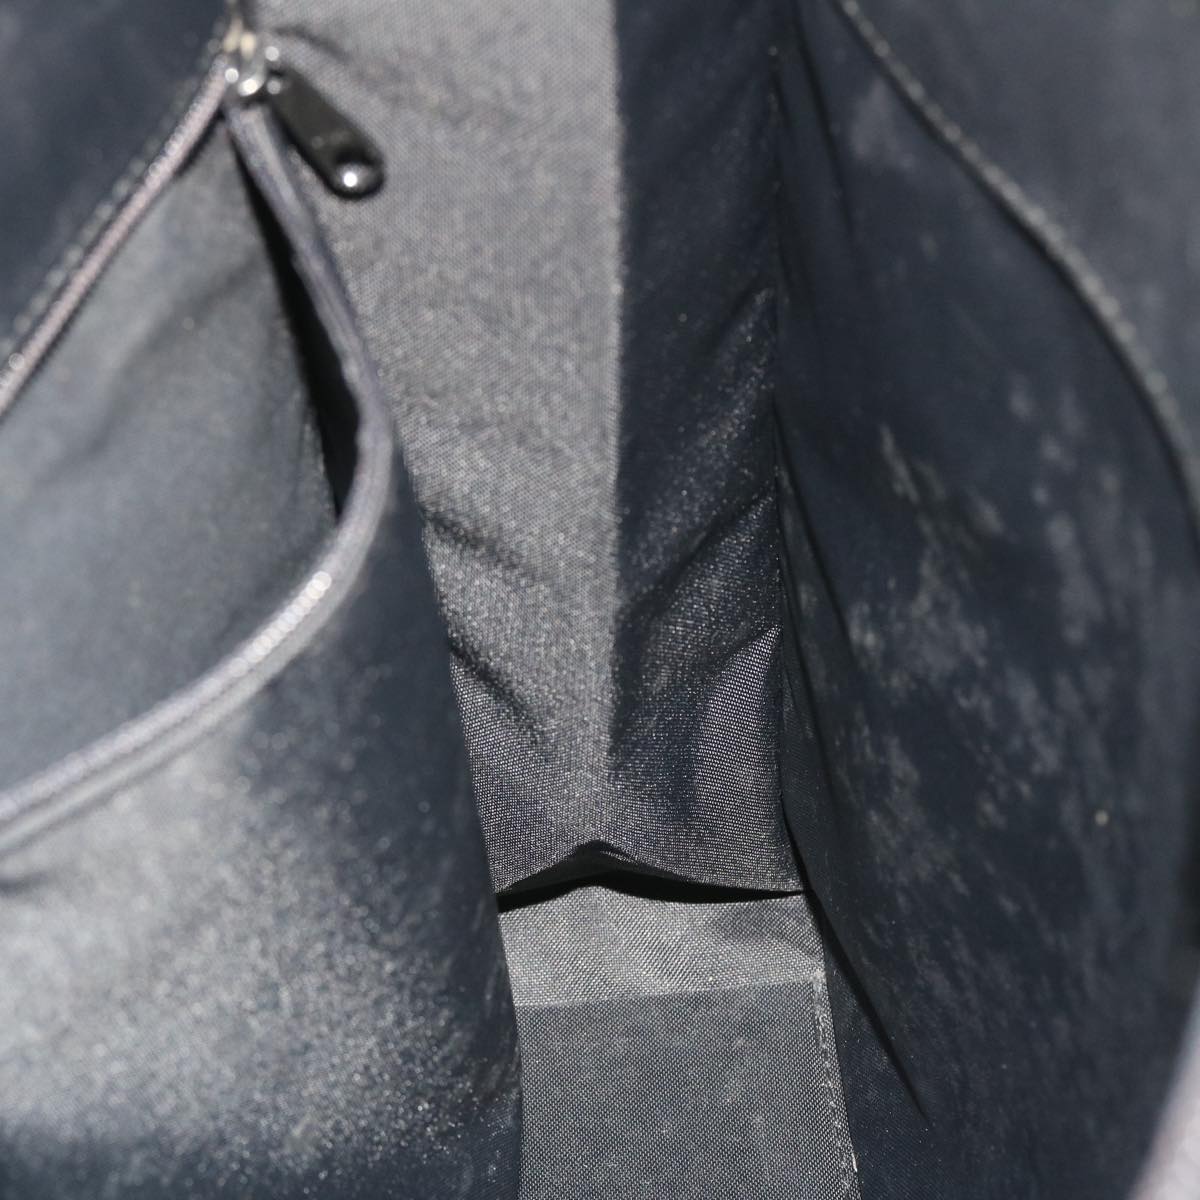 Burberrys Blue Label Tote Bag Nylon Black Auth ep1733